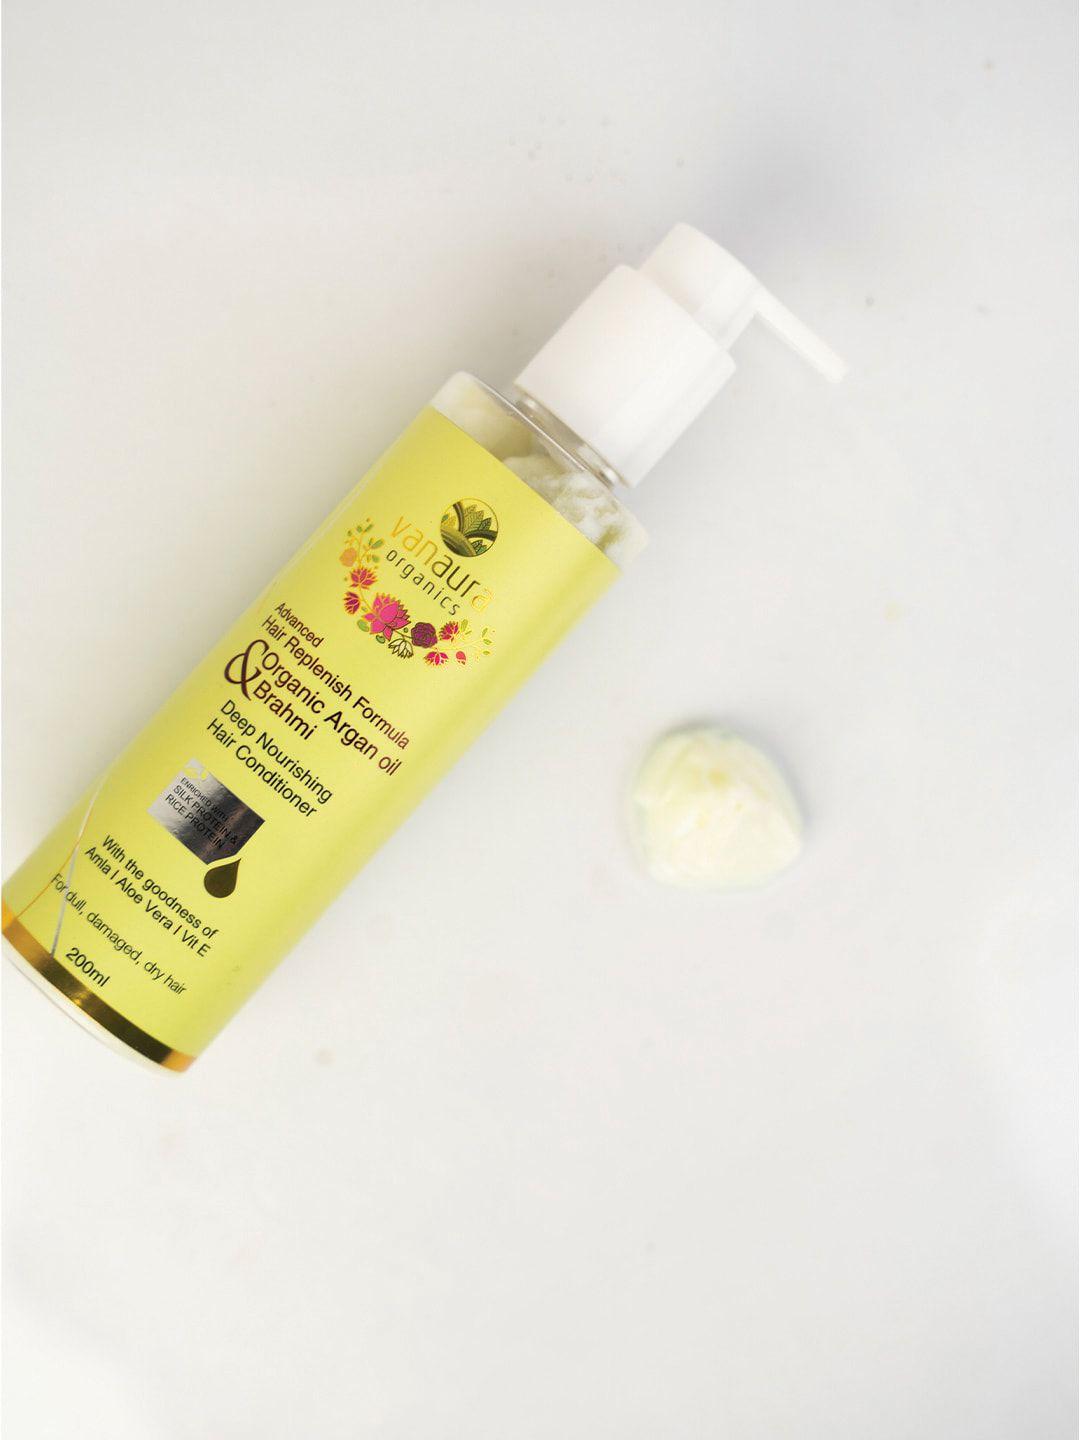 vanaura organics argan oil & amla deep nourishing hair conditioner 200ml